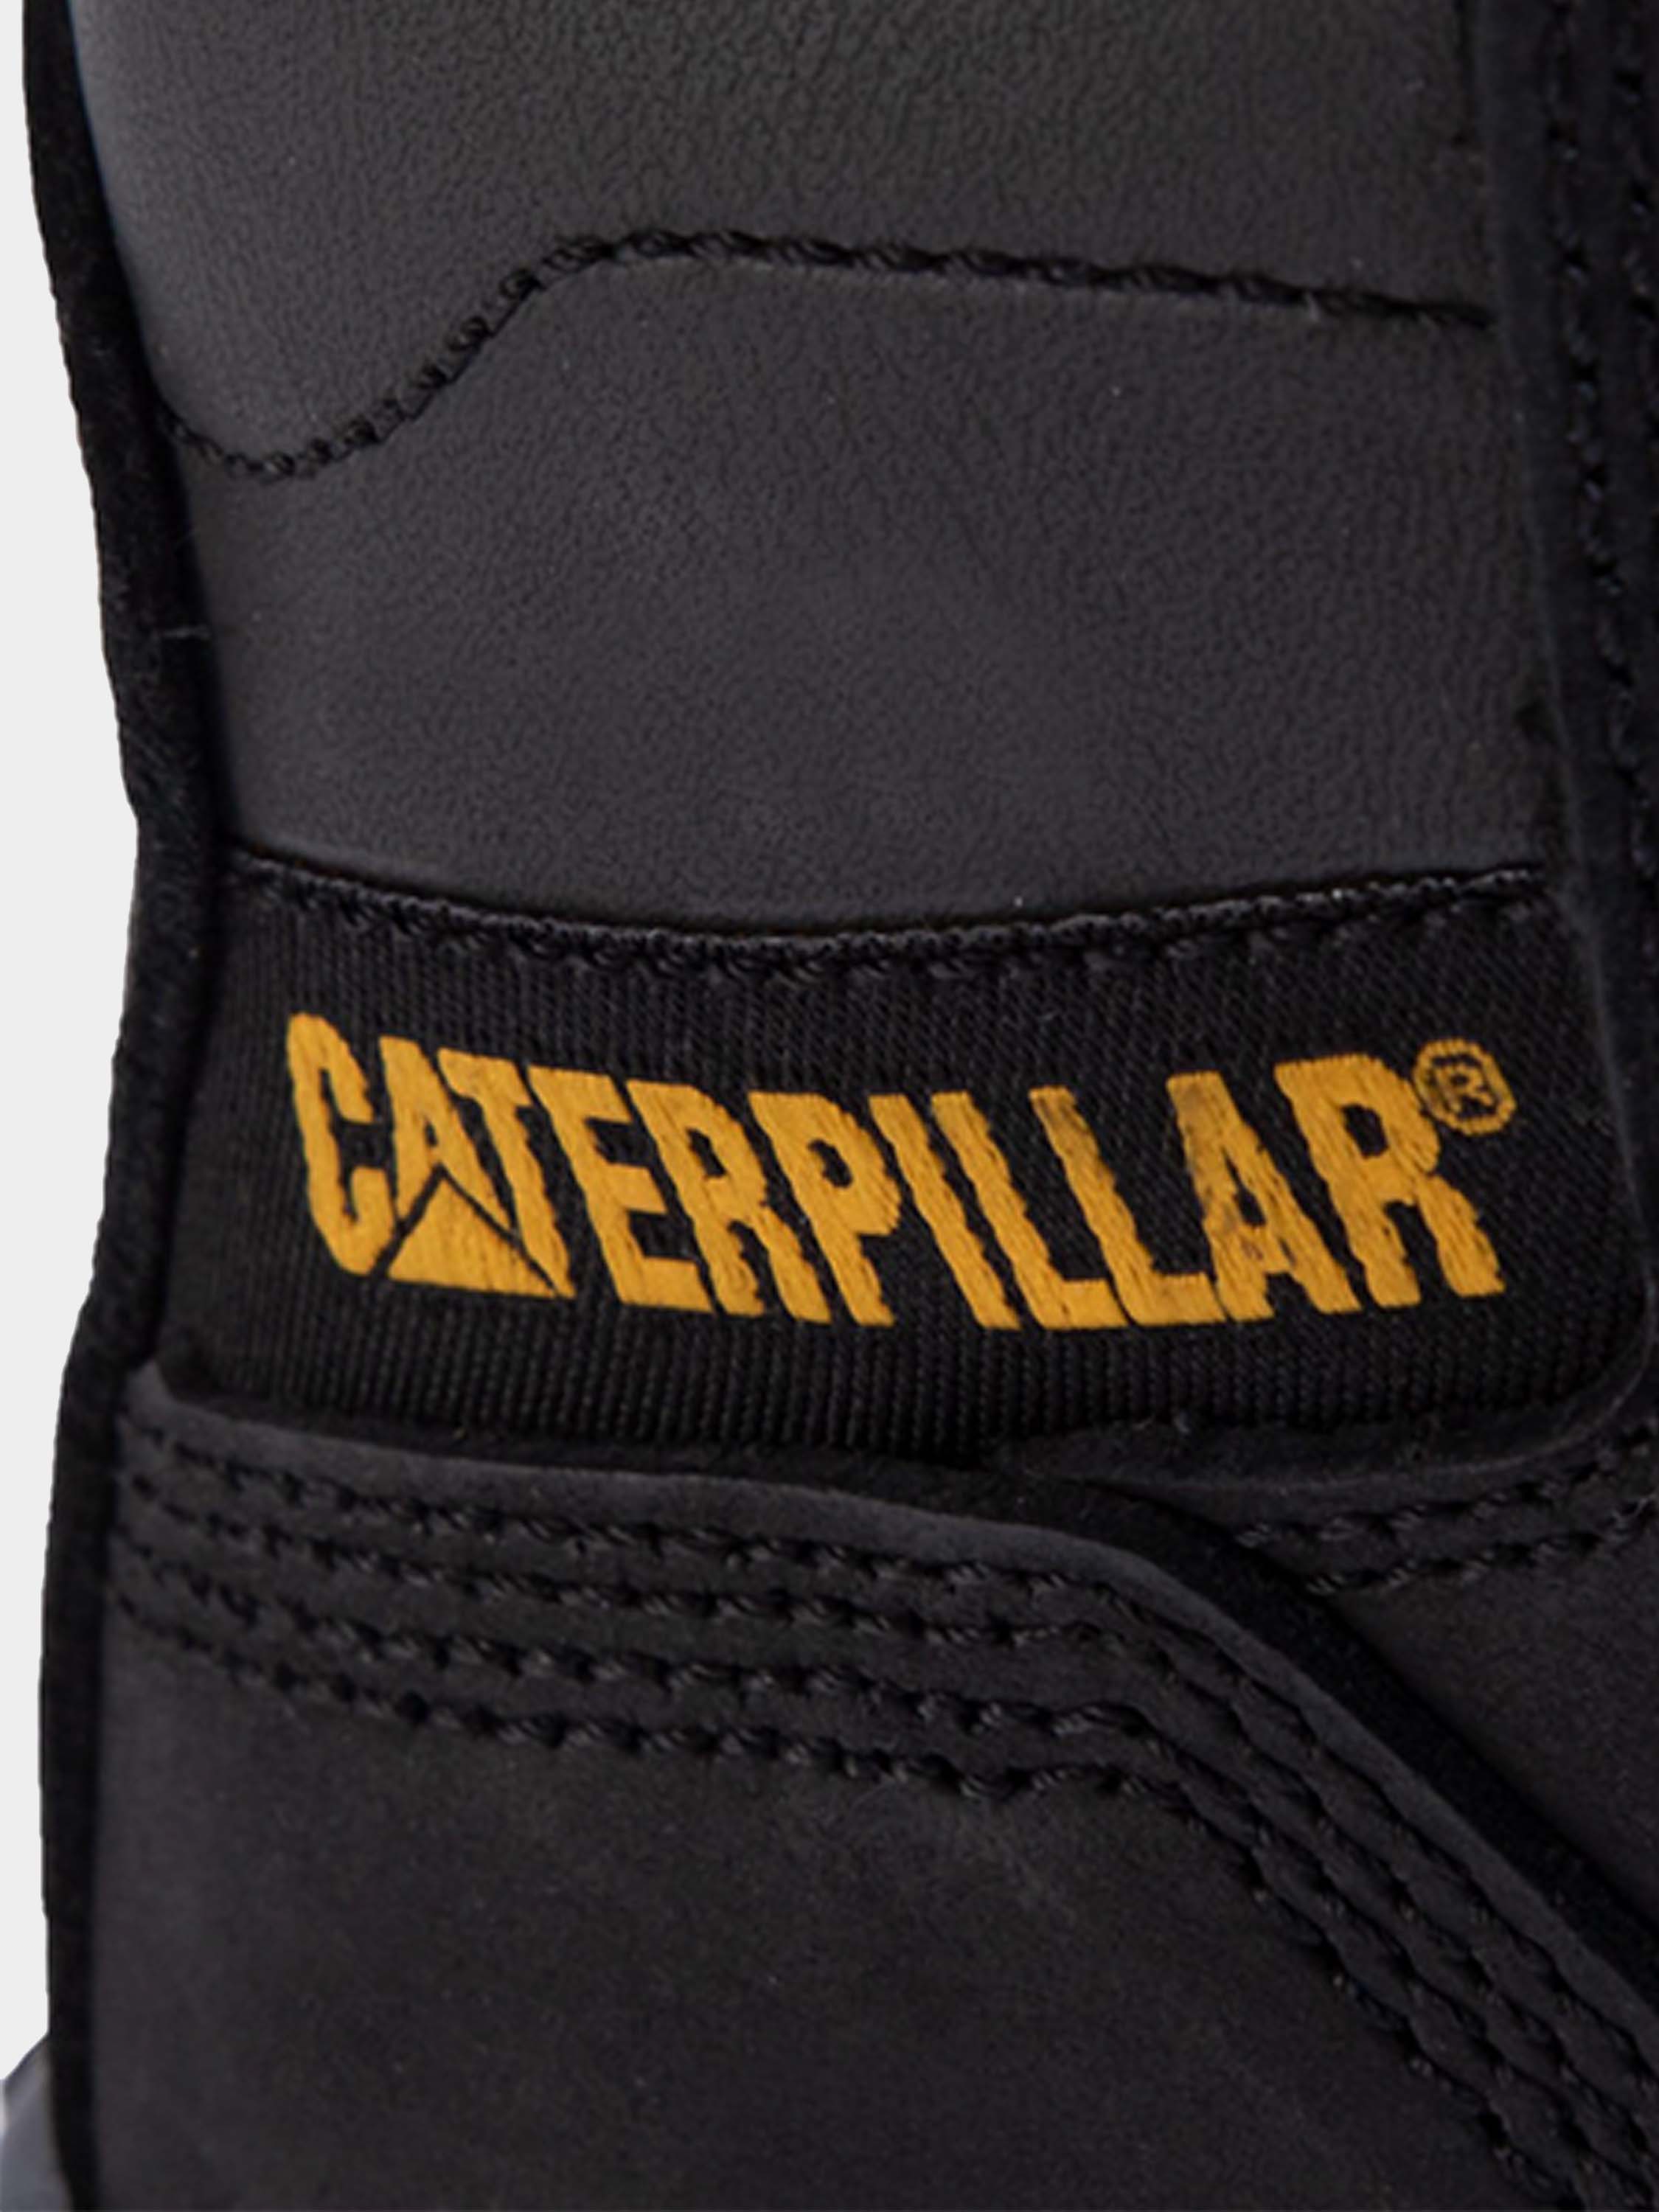 Caterpillar Men's Striver ST S3 SRC Safety Boot #color_Black